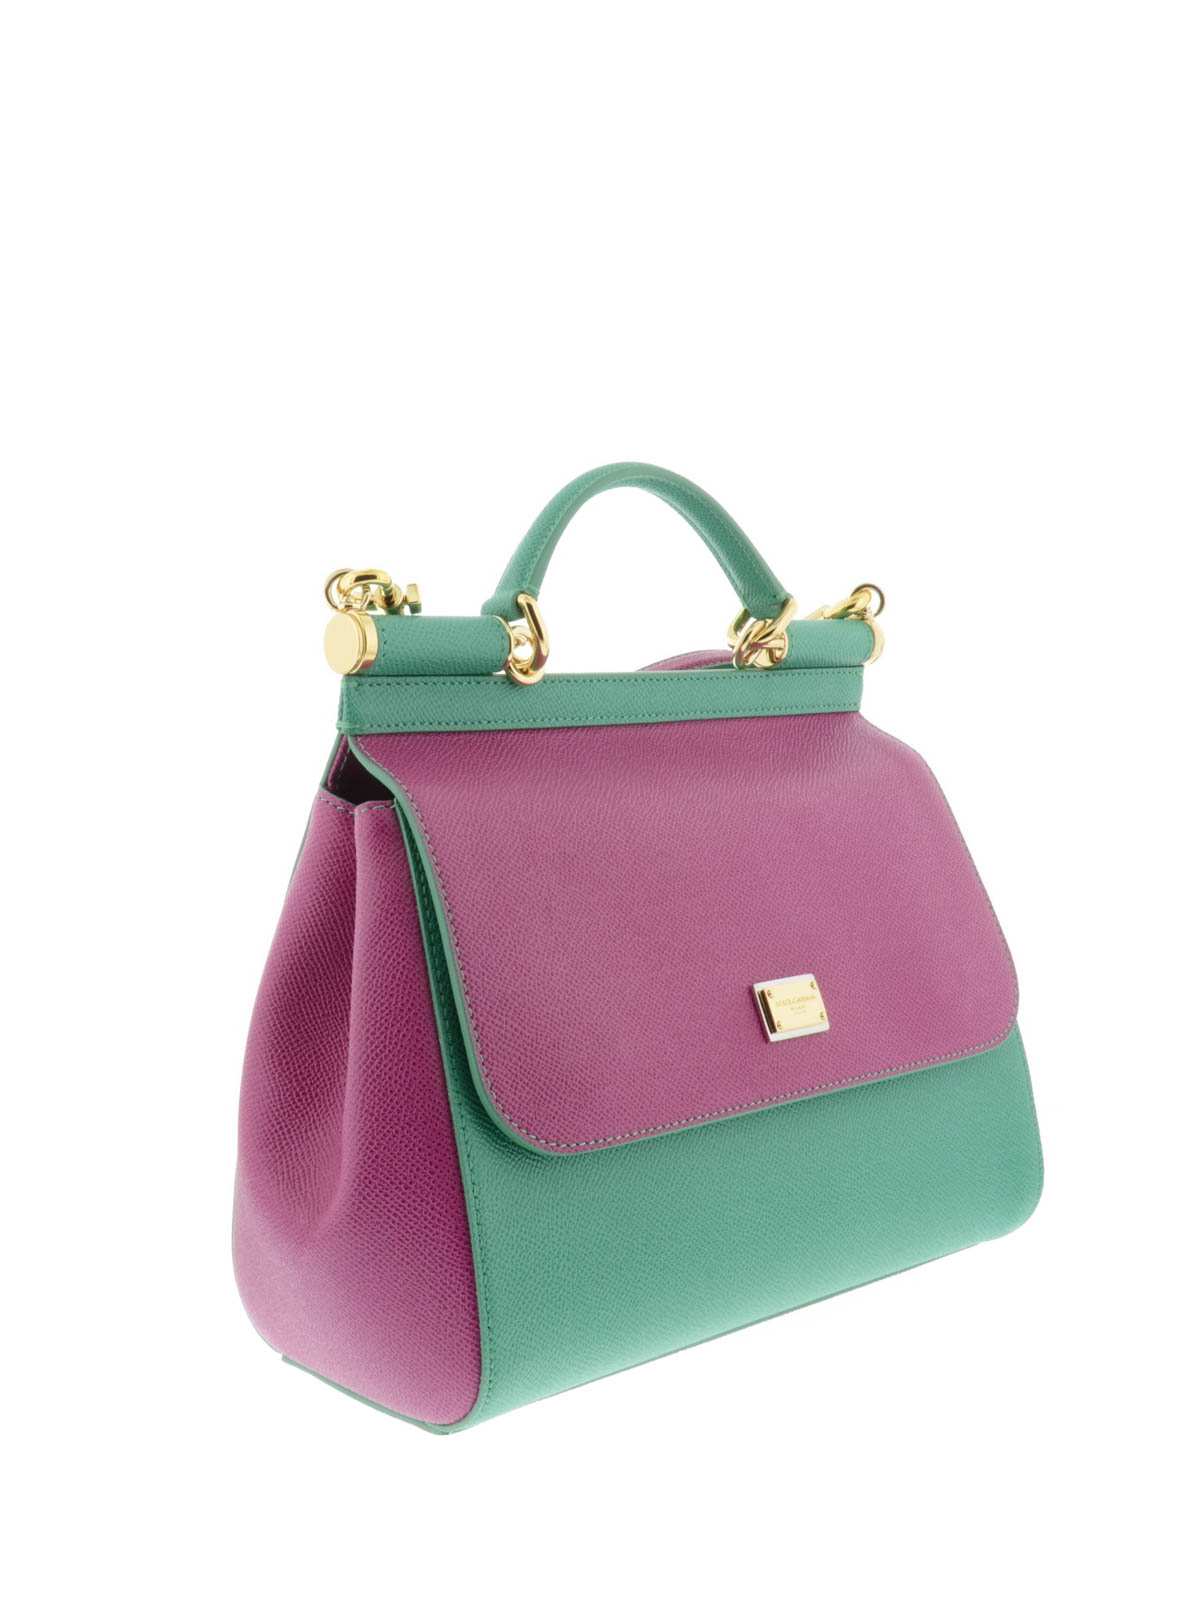 Totes bags Dolce & Gabbana - Sicily Limited Edition medium bag